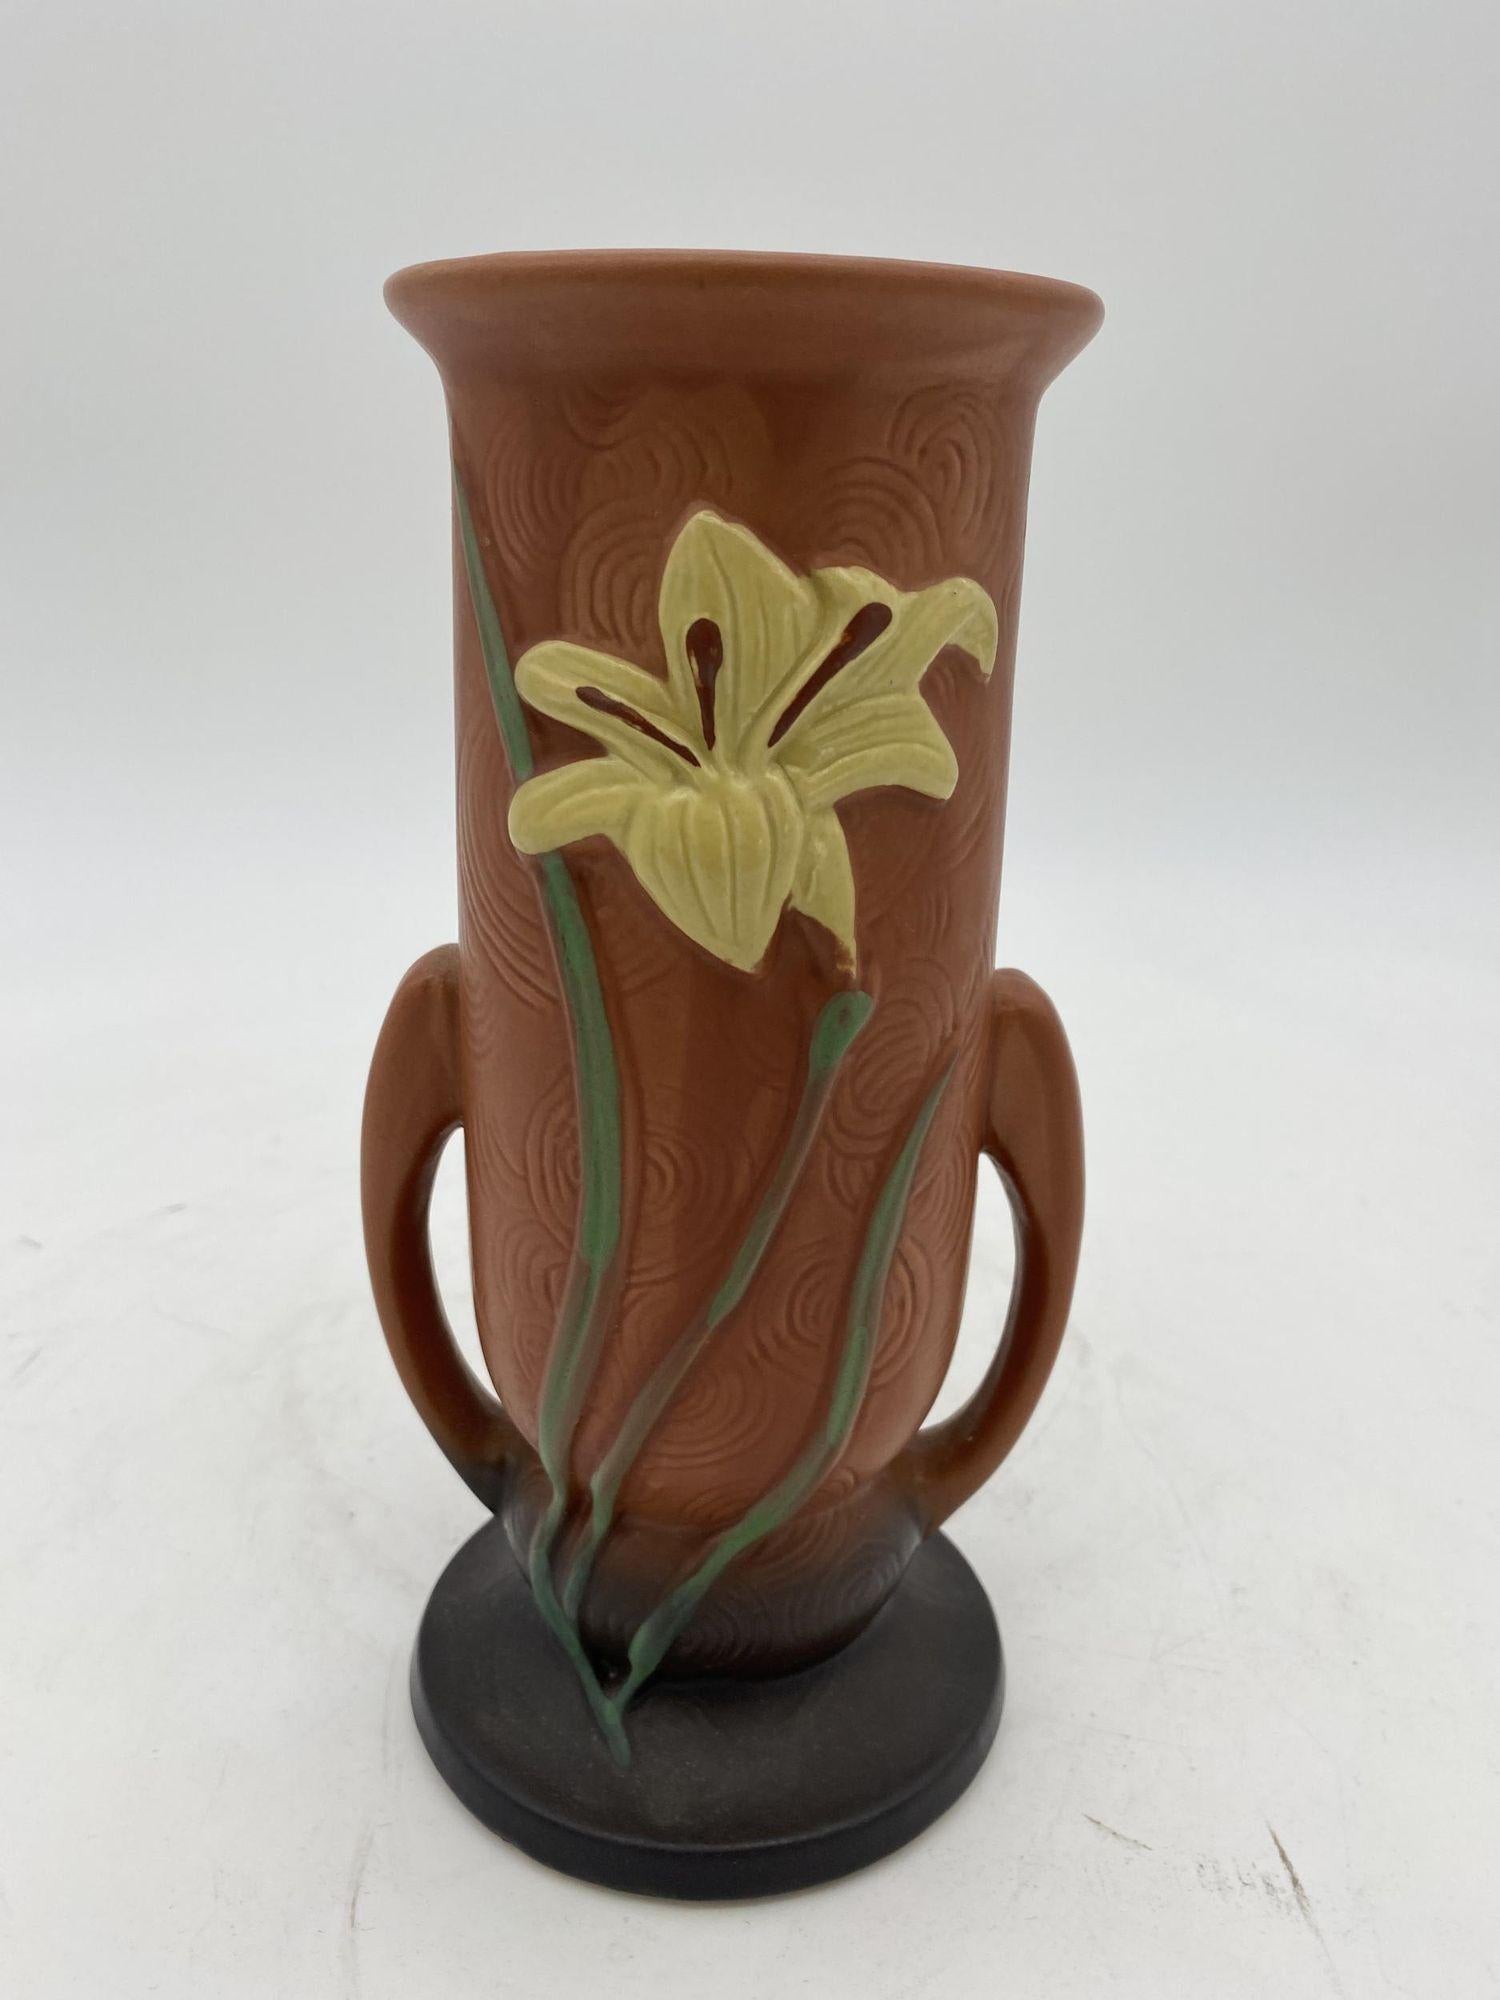 American Pink Zephyr Lily 133-8 Art Pottery Vase by Roseville , 1946